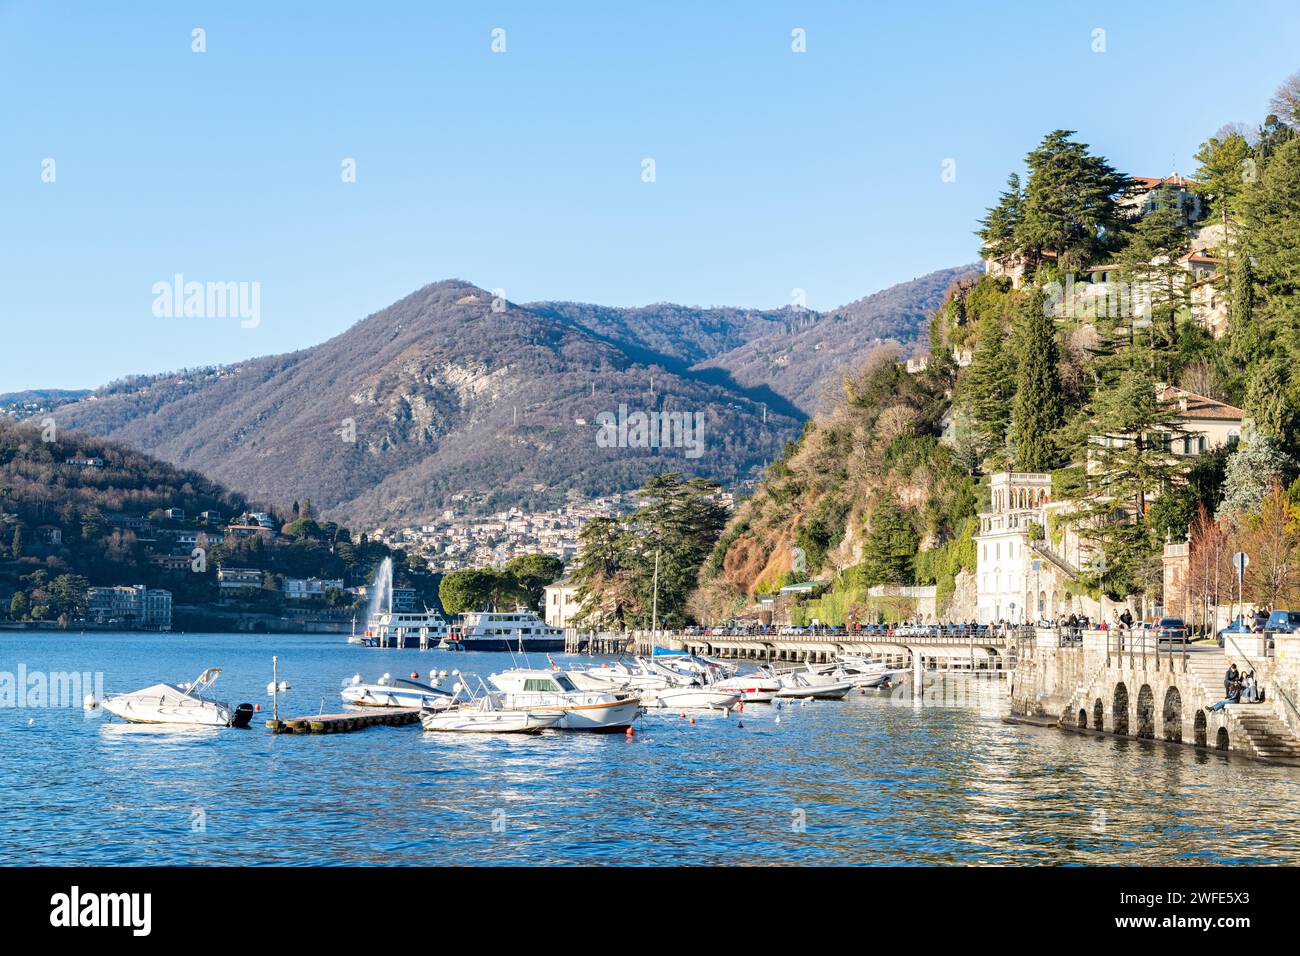 A scenic view of Lake Como / Lago di Como in the Alps mountains in Italy Stock Photo